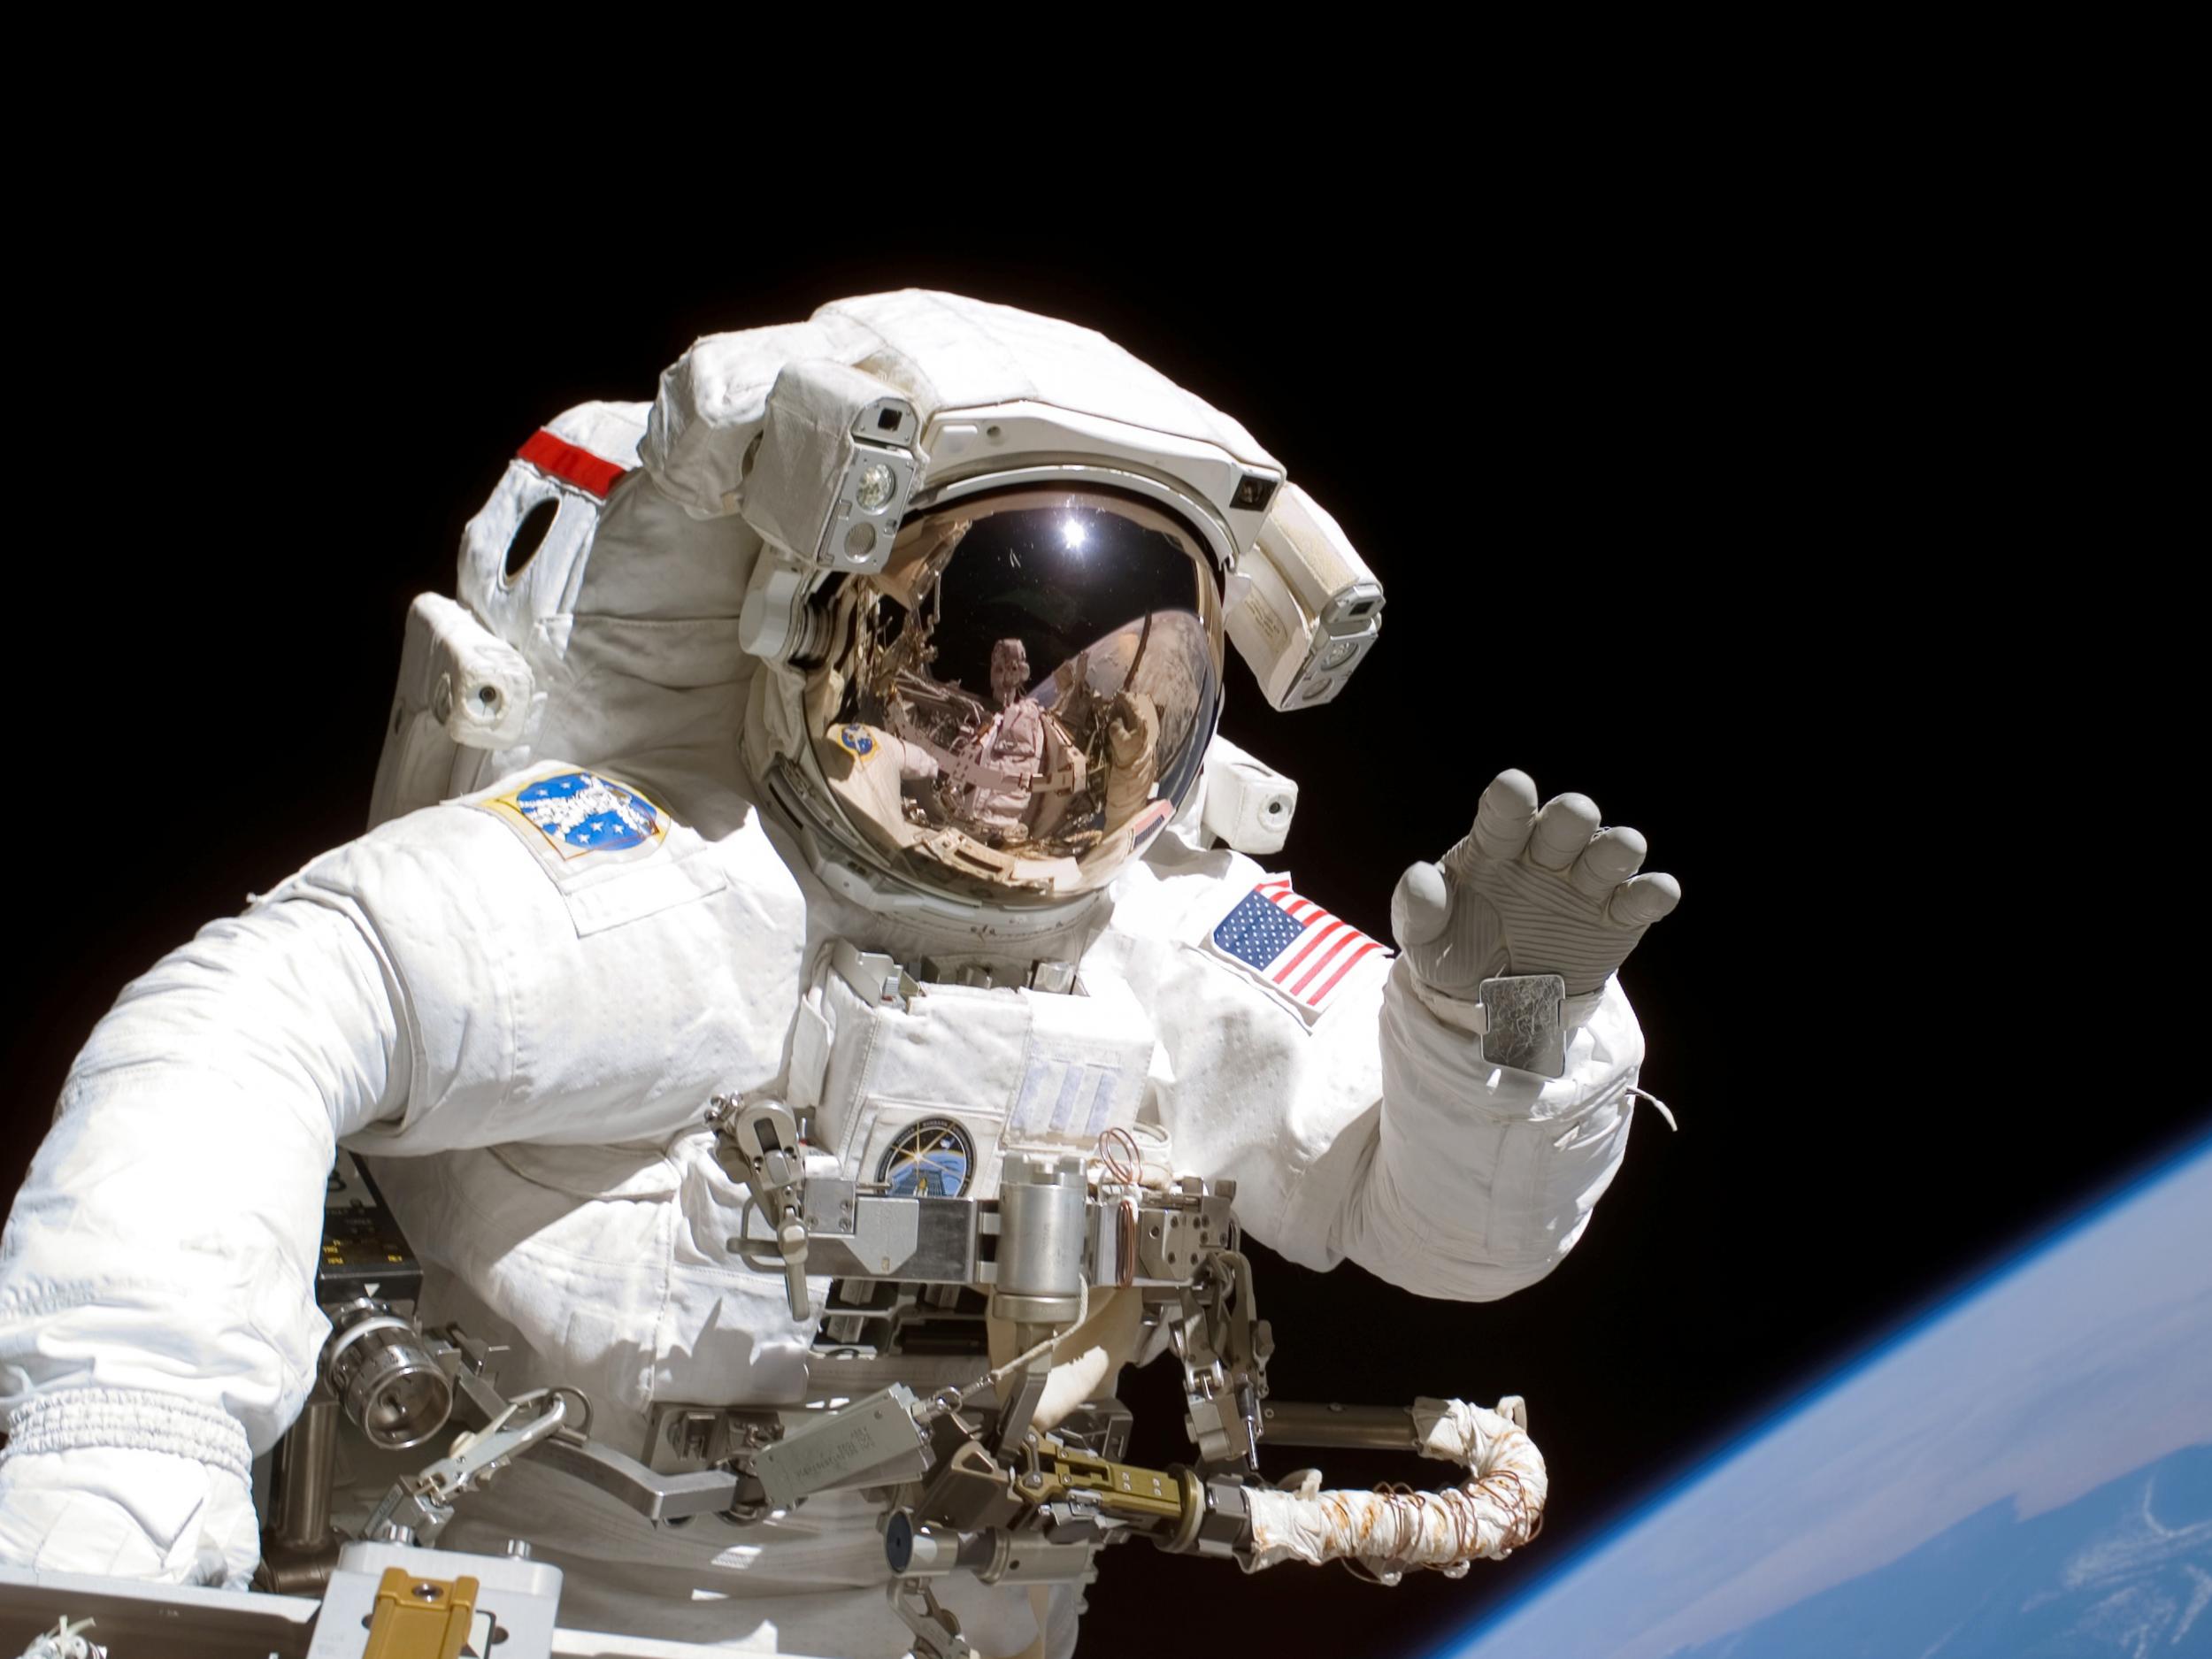 astronaut waving